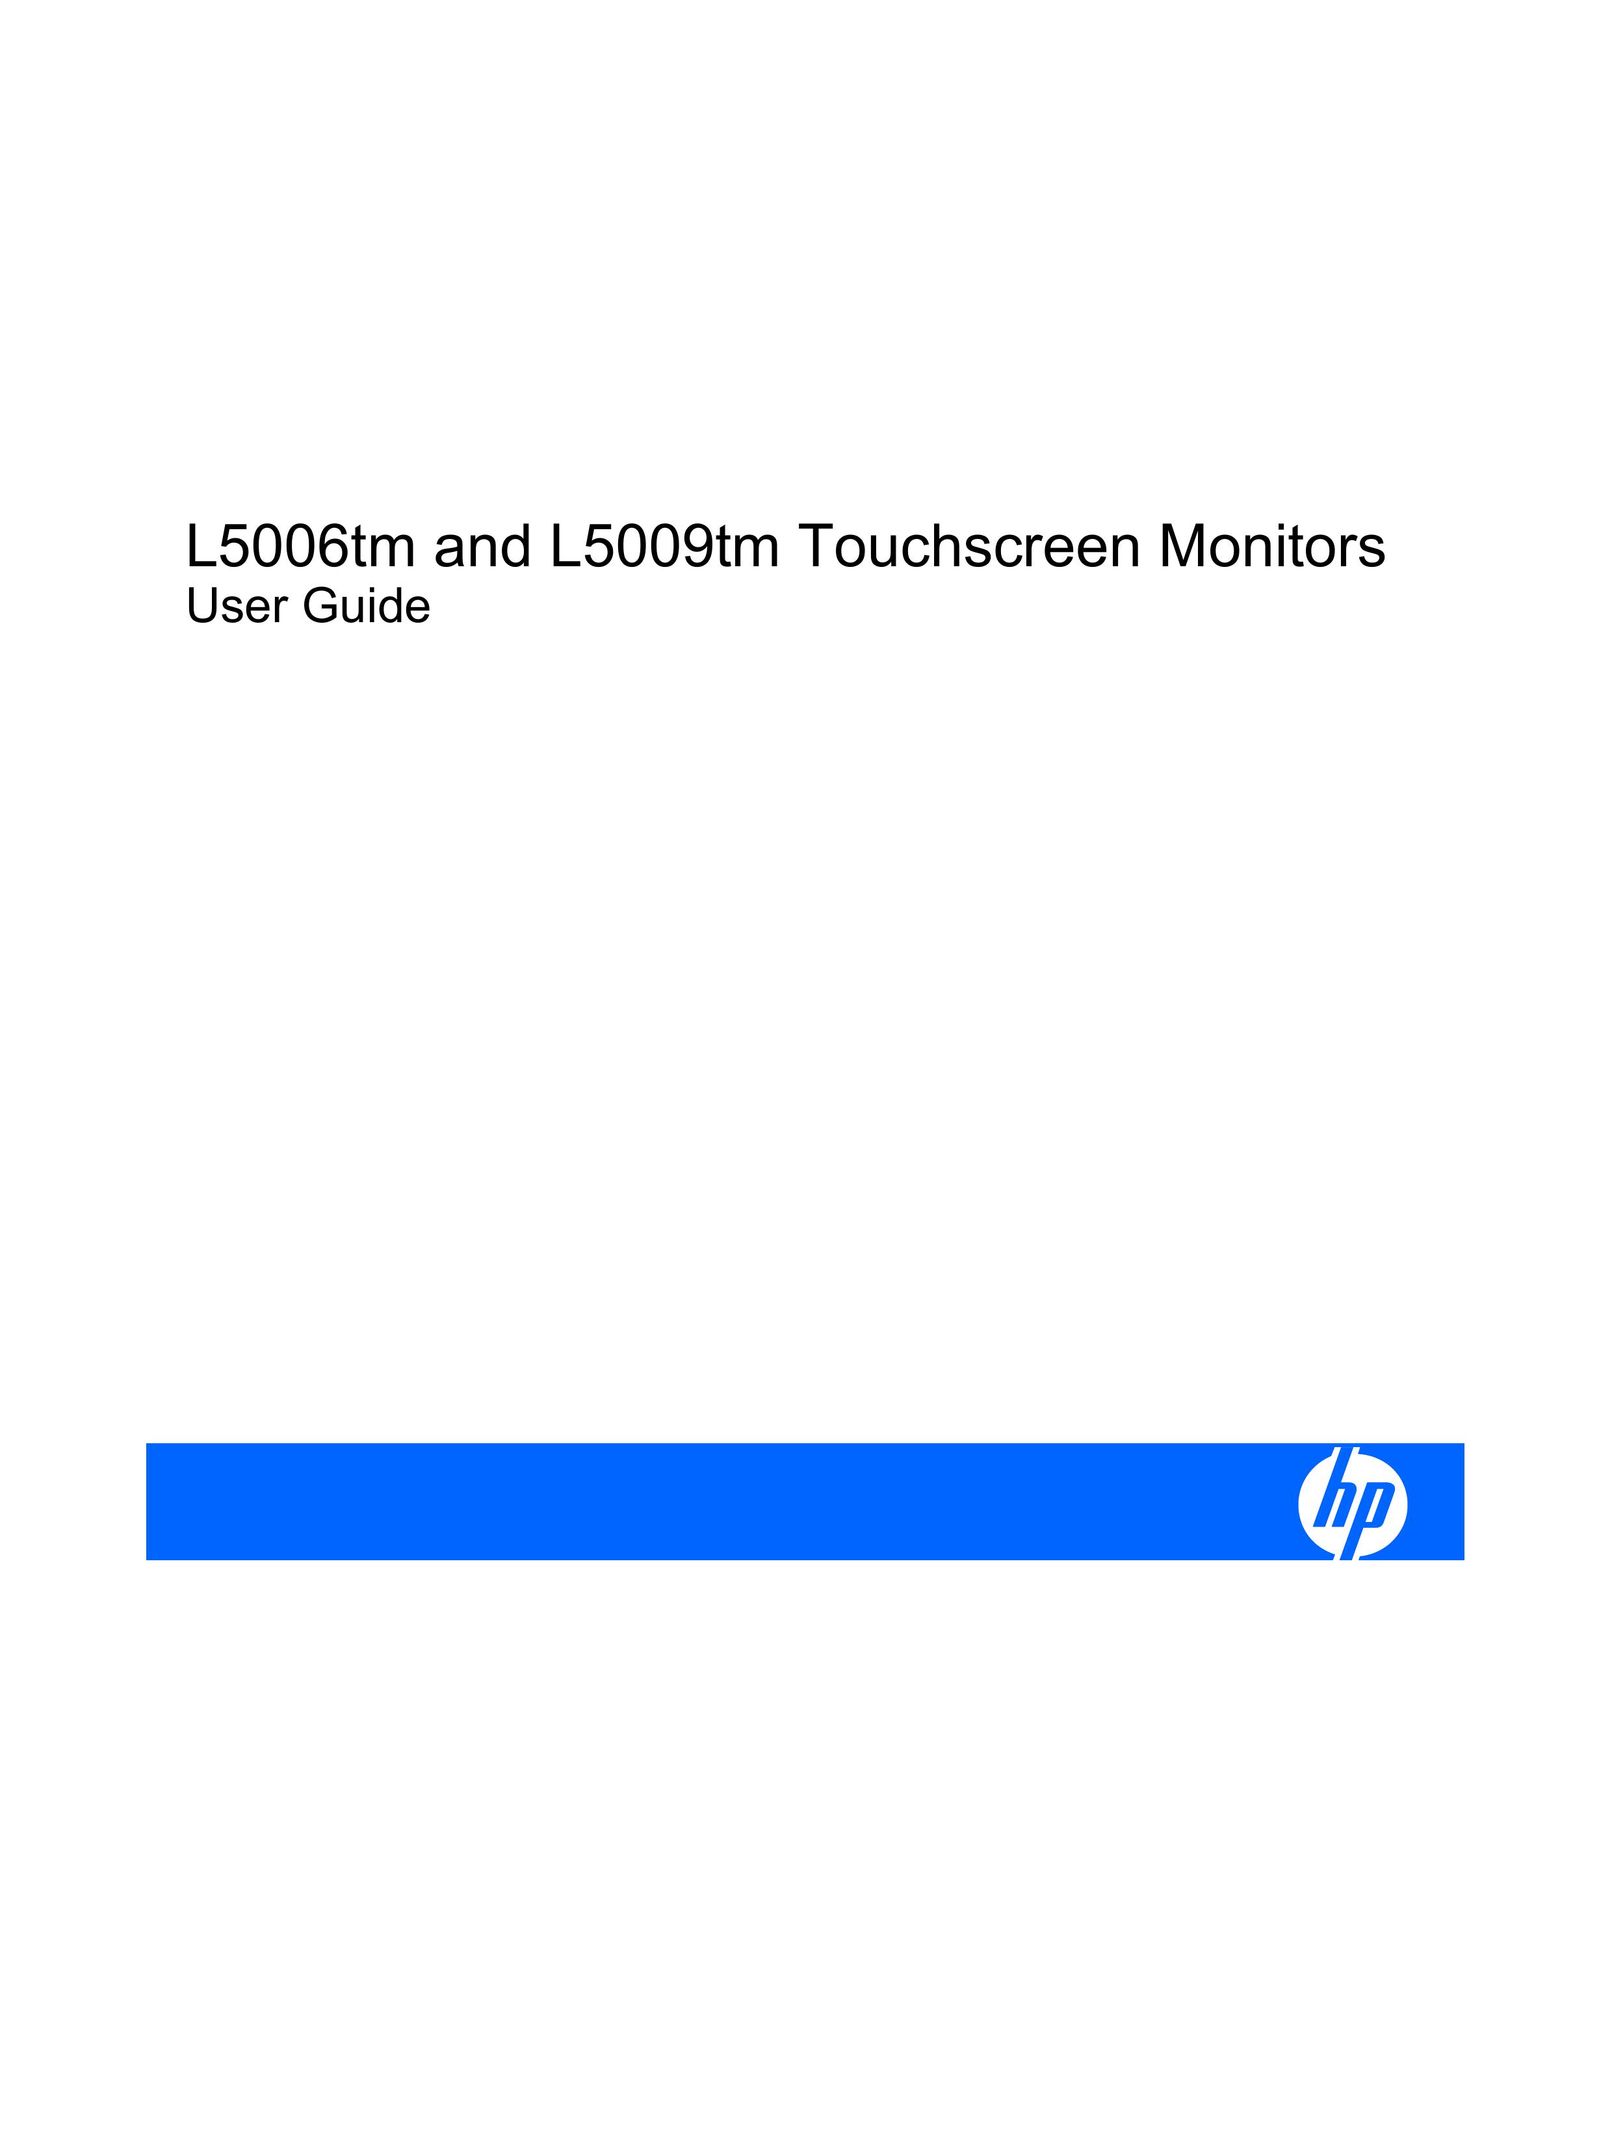 HP (Hewlett-Packard) L5009TM Car Video System User Manual